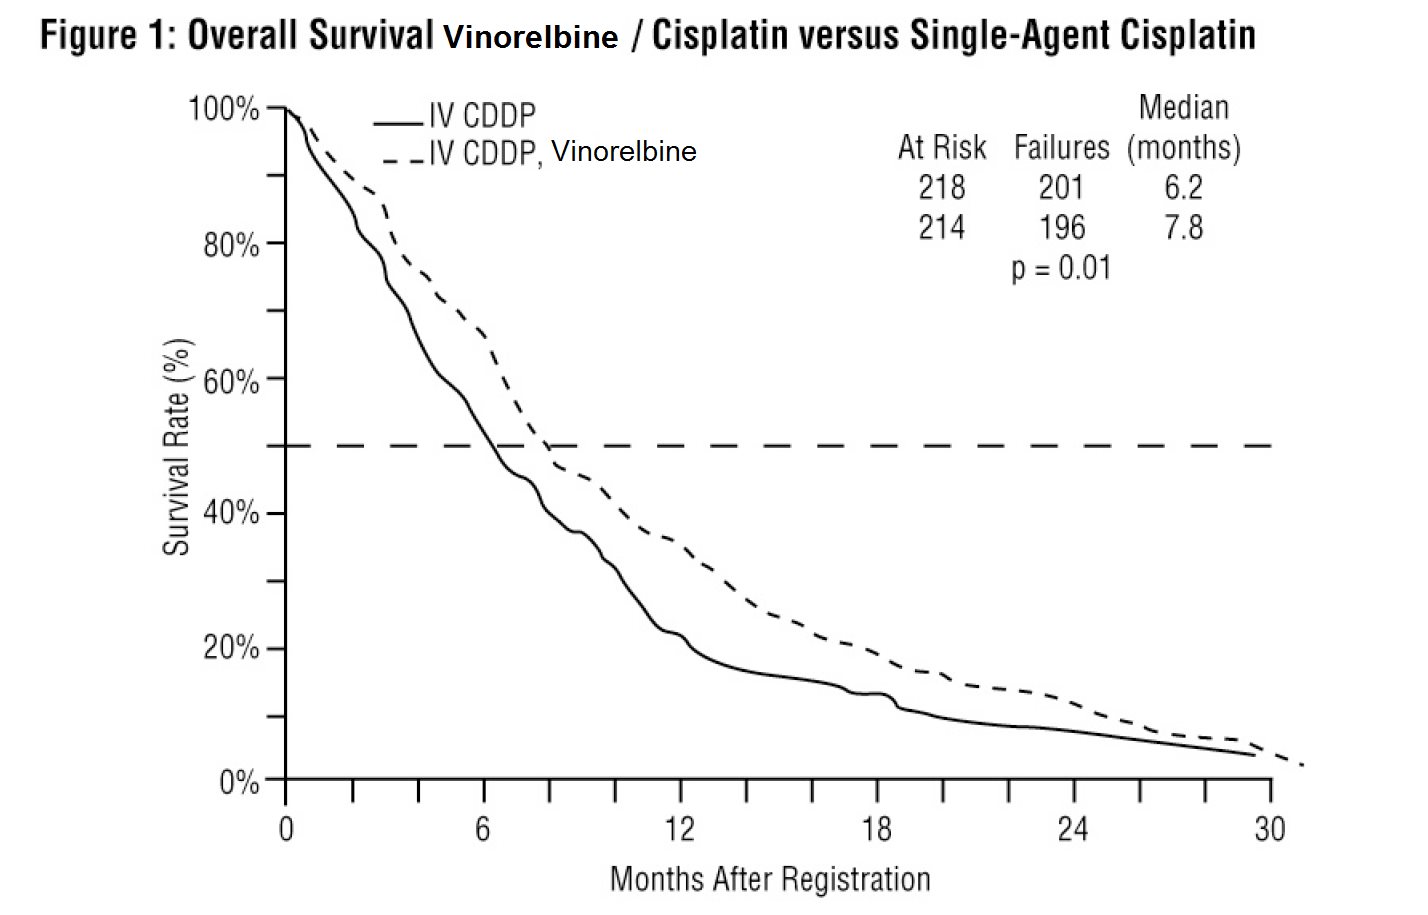 Figure 1: Overall Survival Vinorelbine/Cisplatin versus Single-Agent Cisplatin